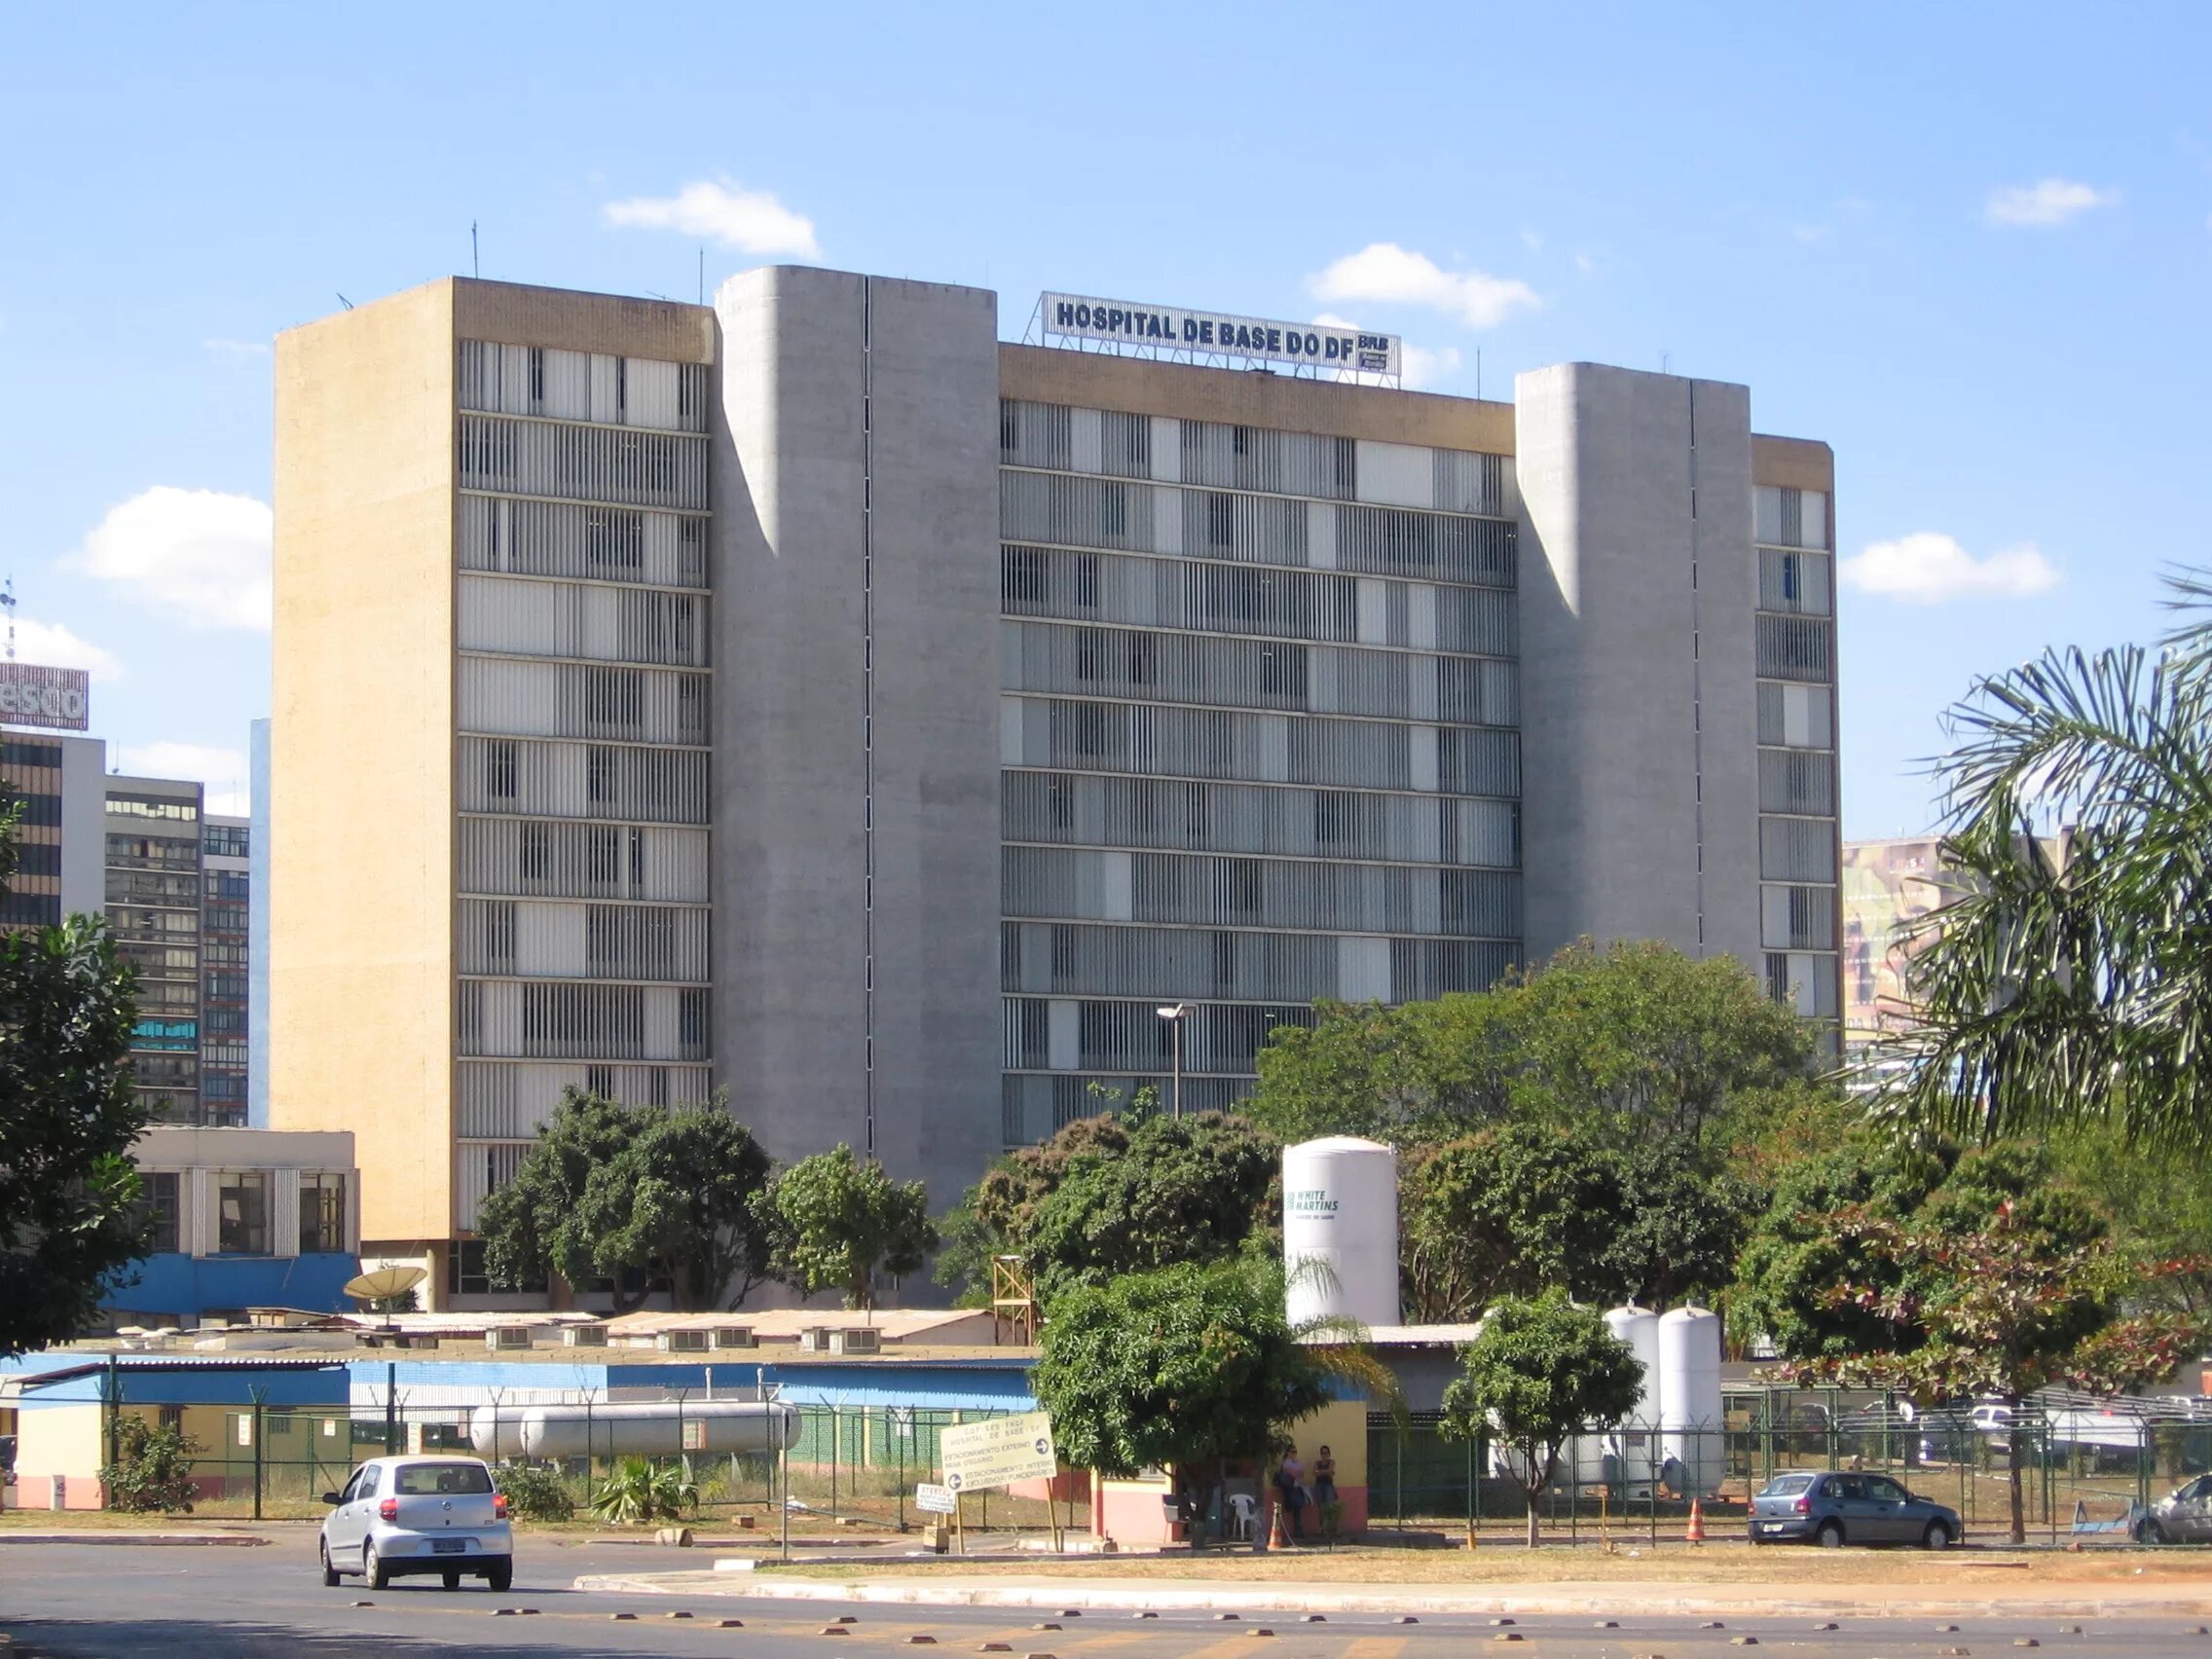 Госпиталь на дому. Brasilia торгпредство. Но Хоспитал. Яссон Эфиопия госпиталь. Госпиталь в Африке фото здания.